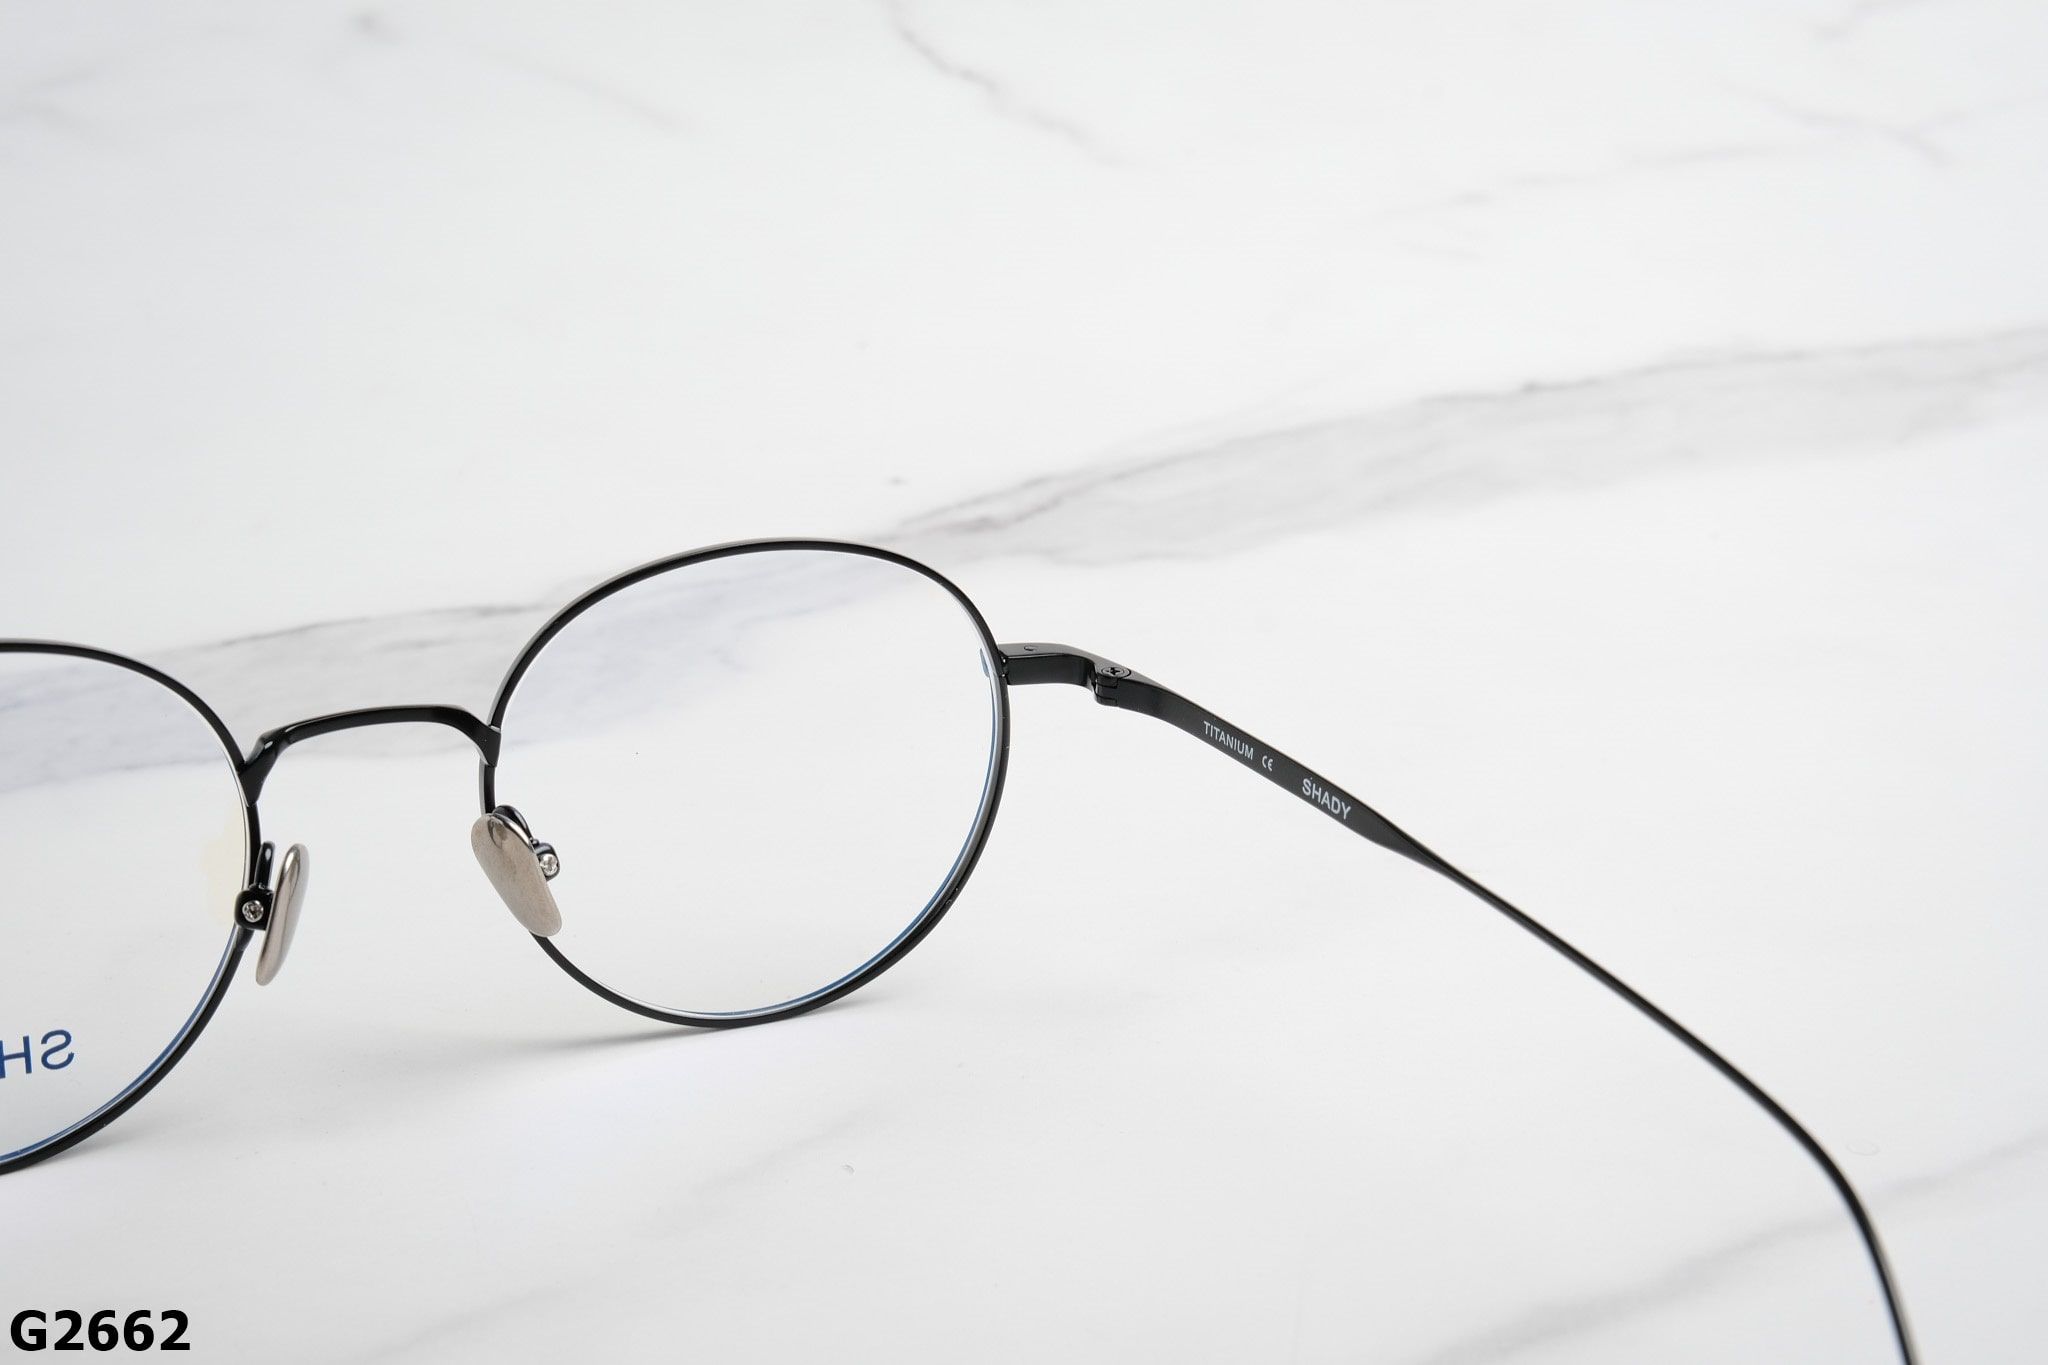  SHADY Eyewear - Glasses - G2662 